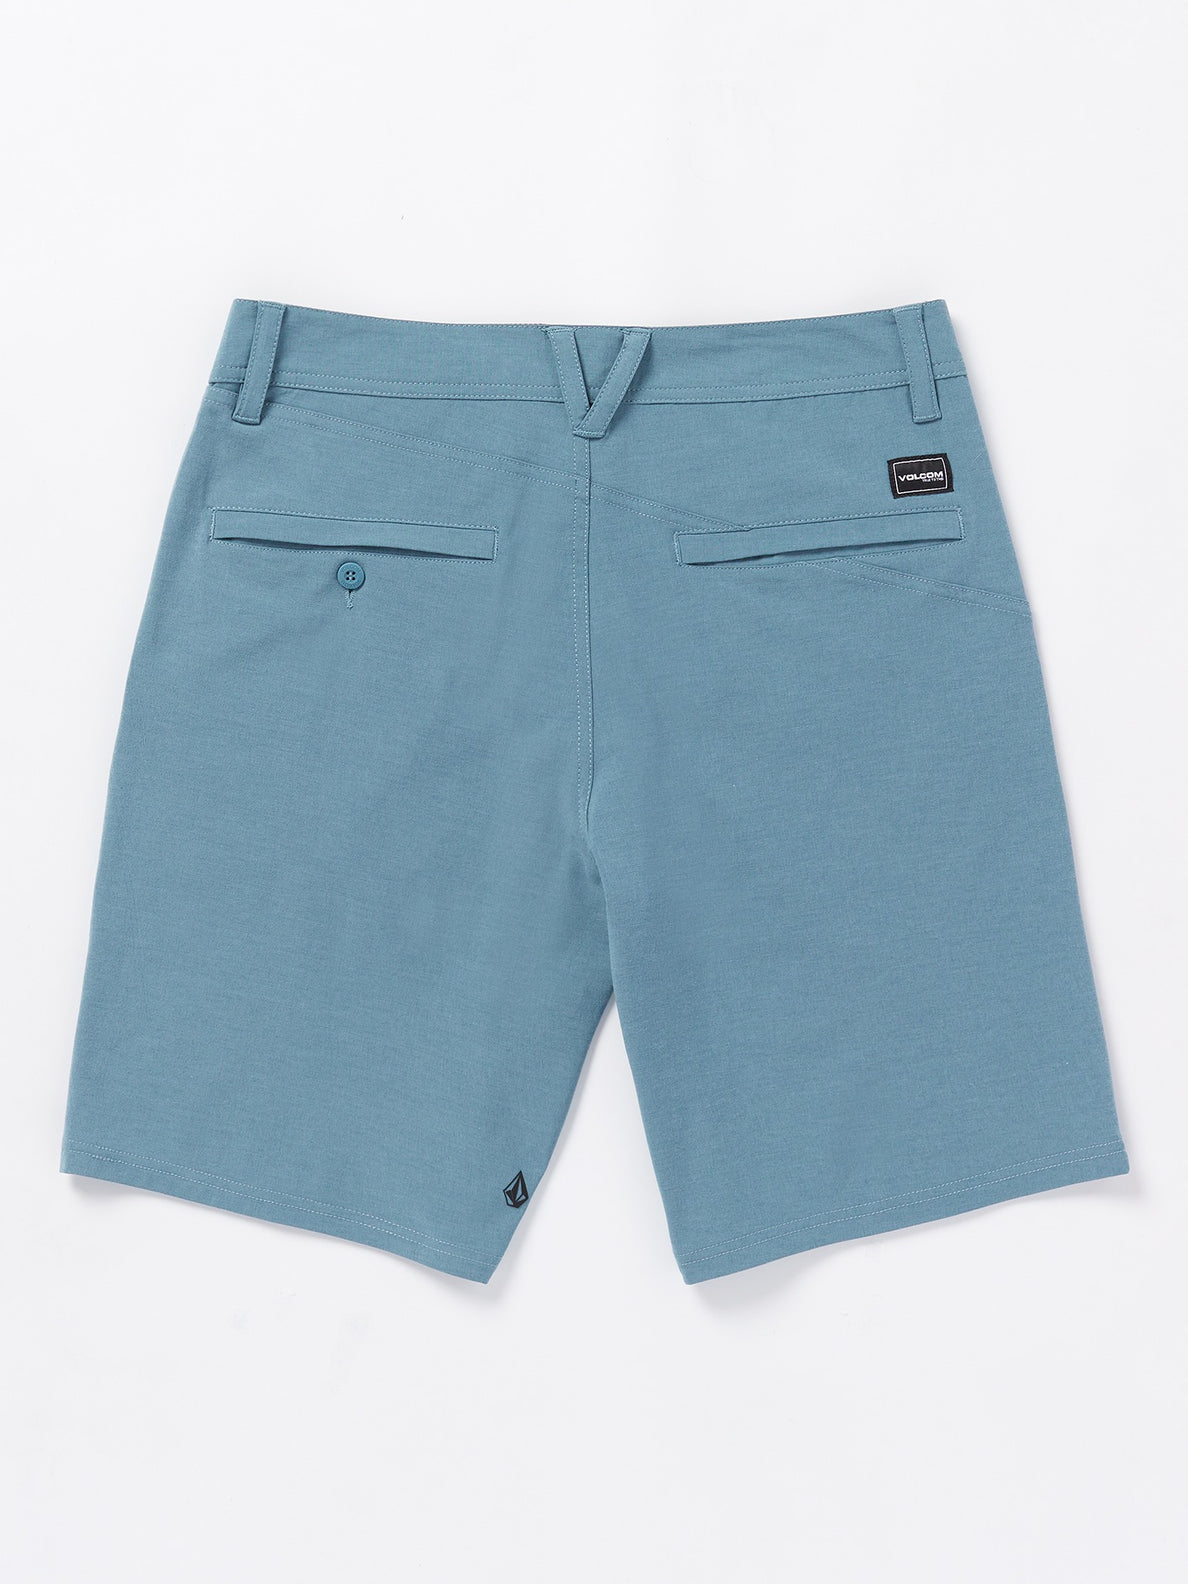 Frickin Cross Shred Static Shorts - Stone Blue